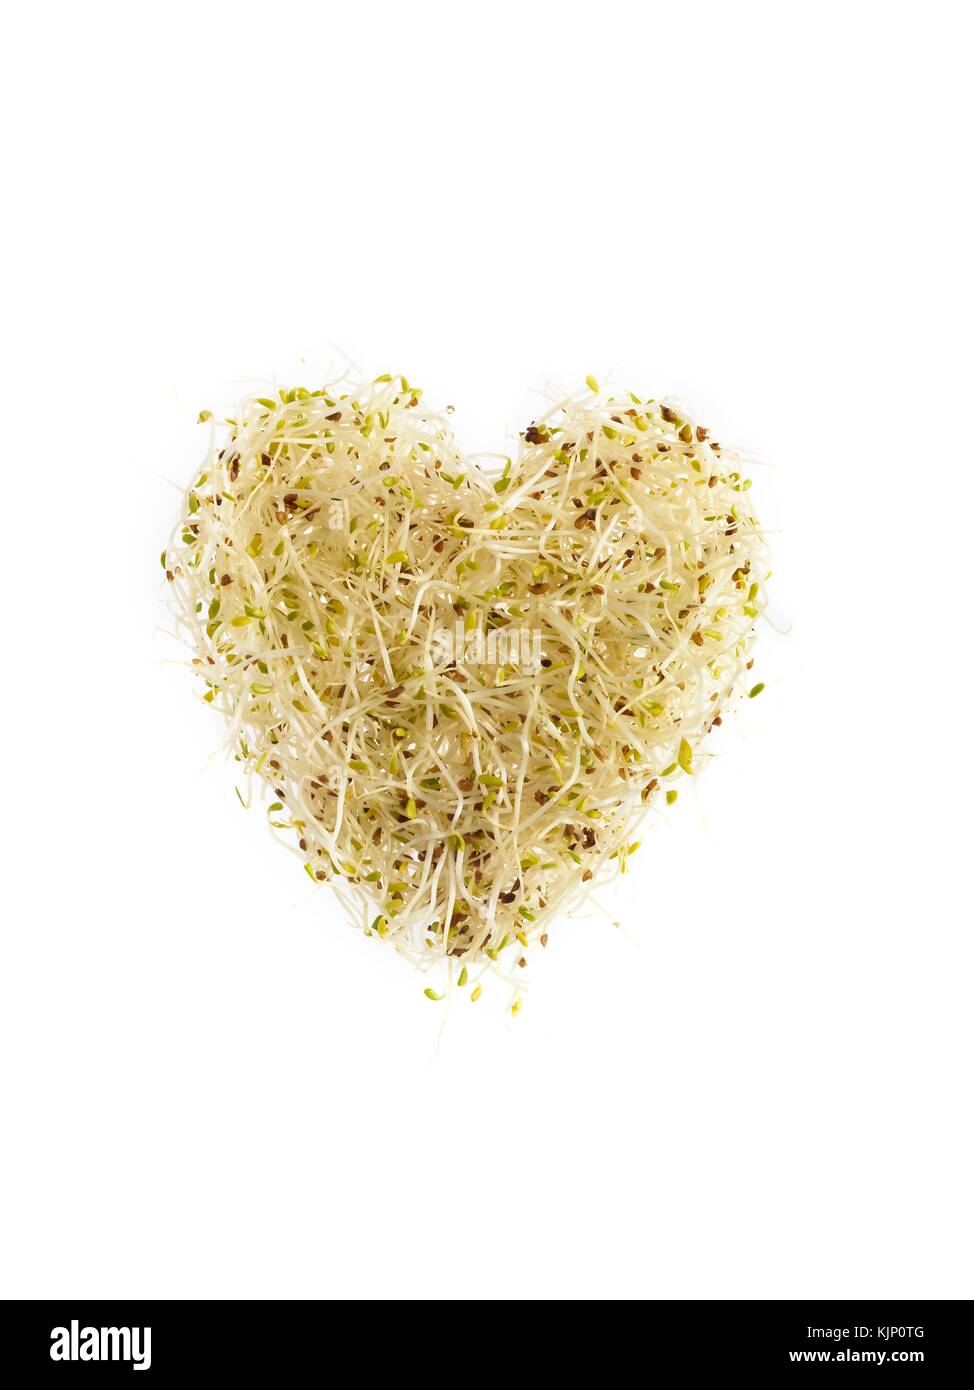 Sprouting alfalfa, heart shaped, on white background. Stock Photo